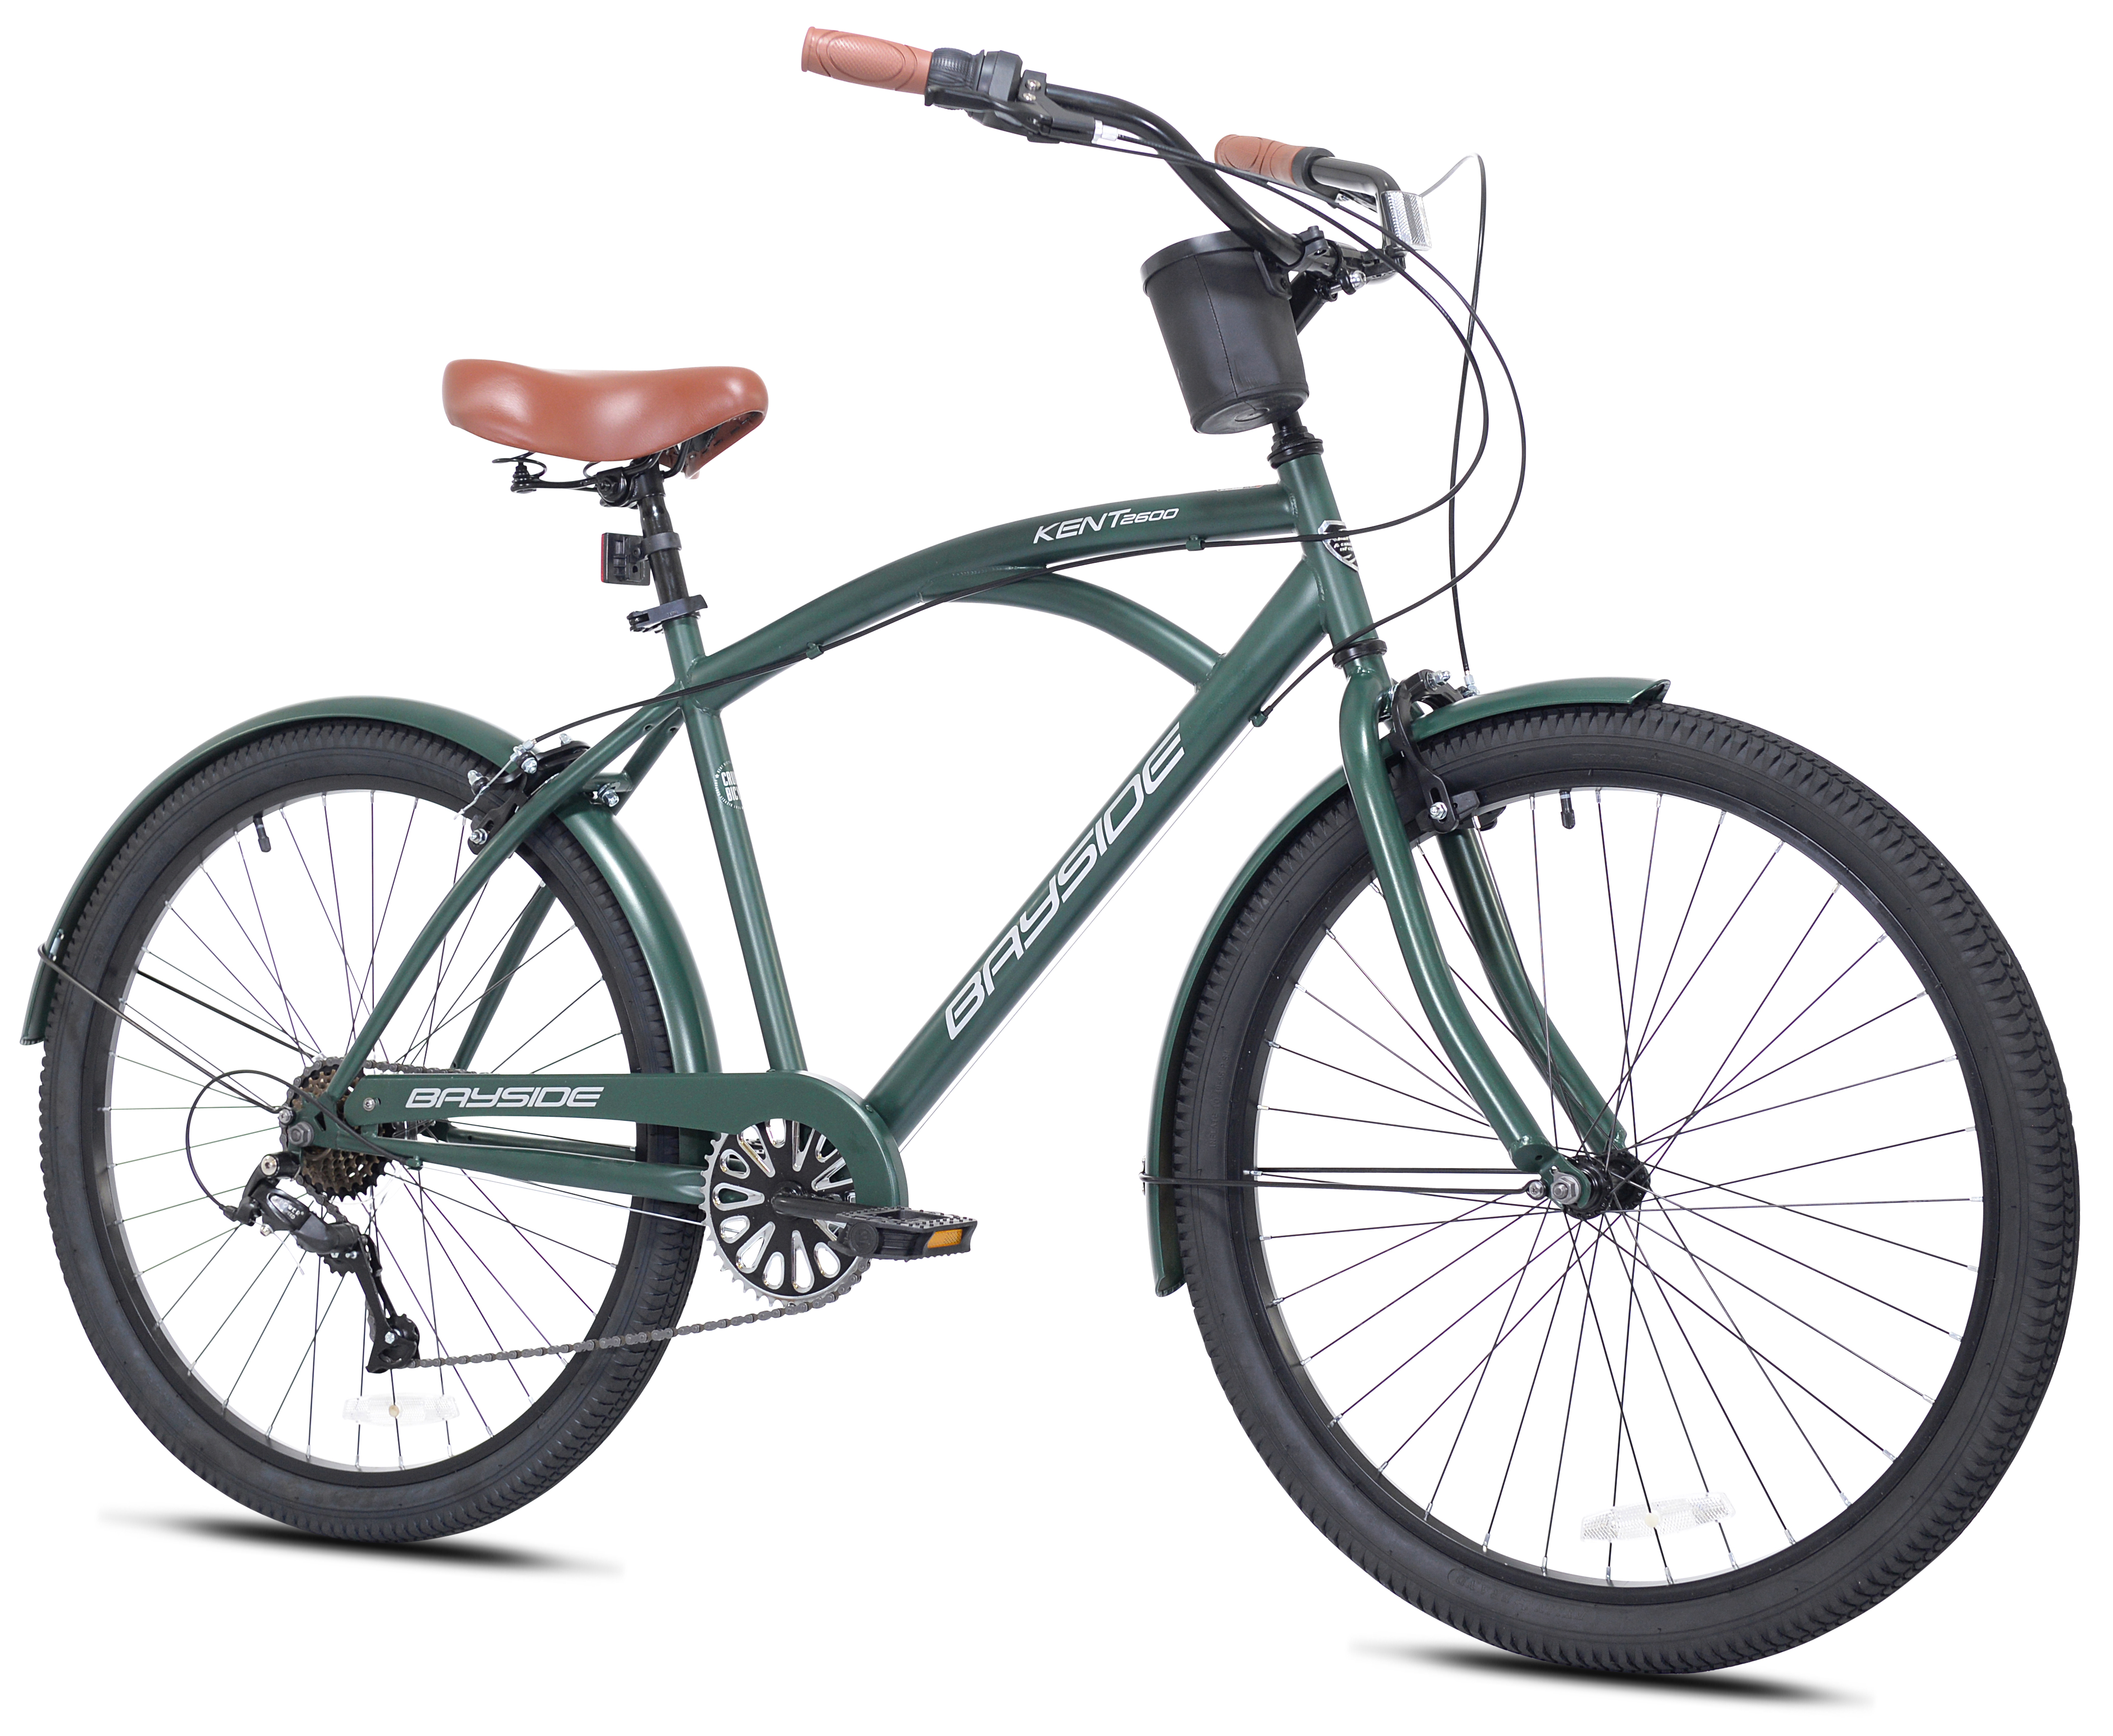 Kent Bicycles 26-inch Bayside Men's Cruiser Bicycle, Green - image 2 of 8